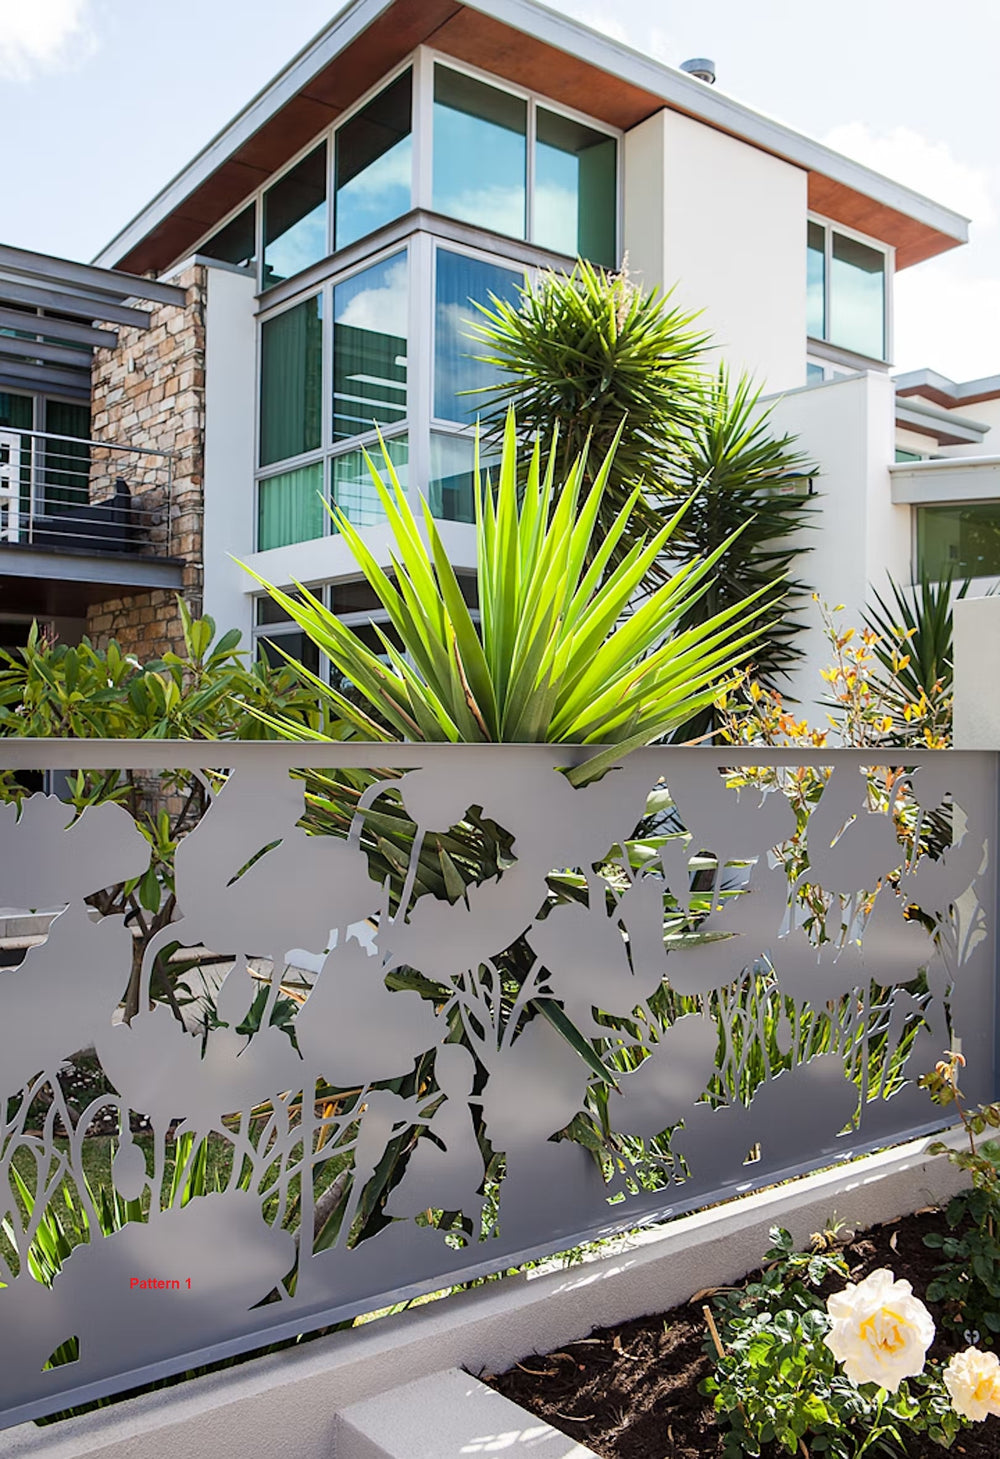 Metal Decorative Plasma Cut Fence Panel | Heavy Duty Metal Fence | Made in Canada | Model # FP937